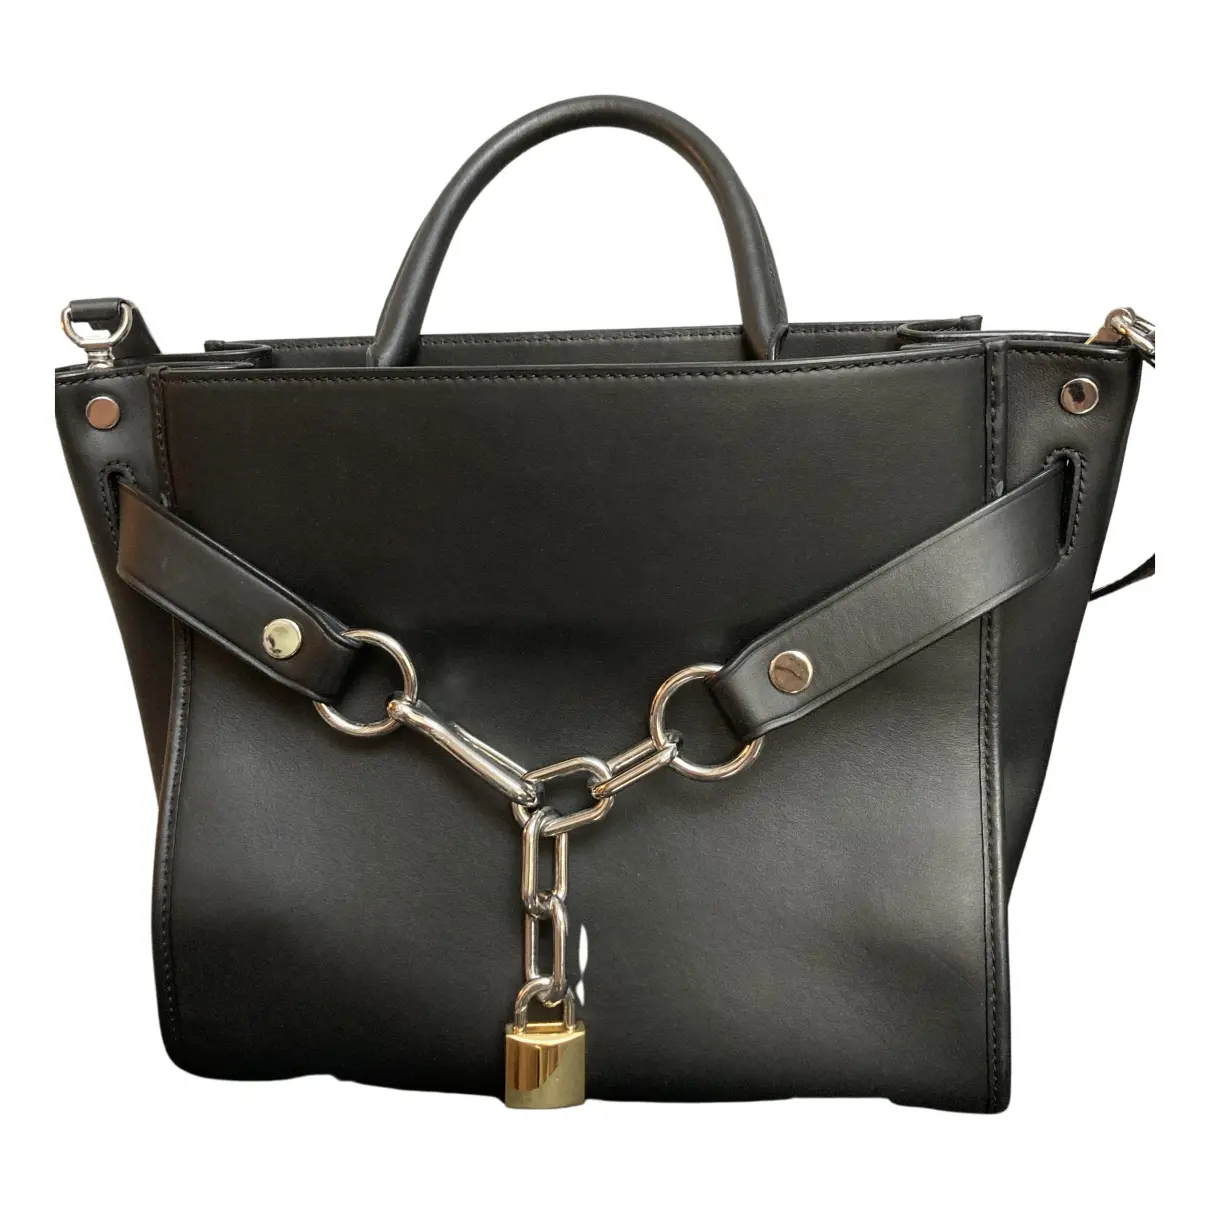 Attica leather handbag Alexander Wang